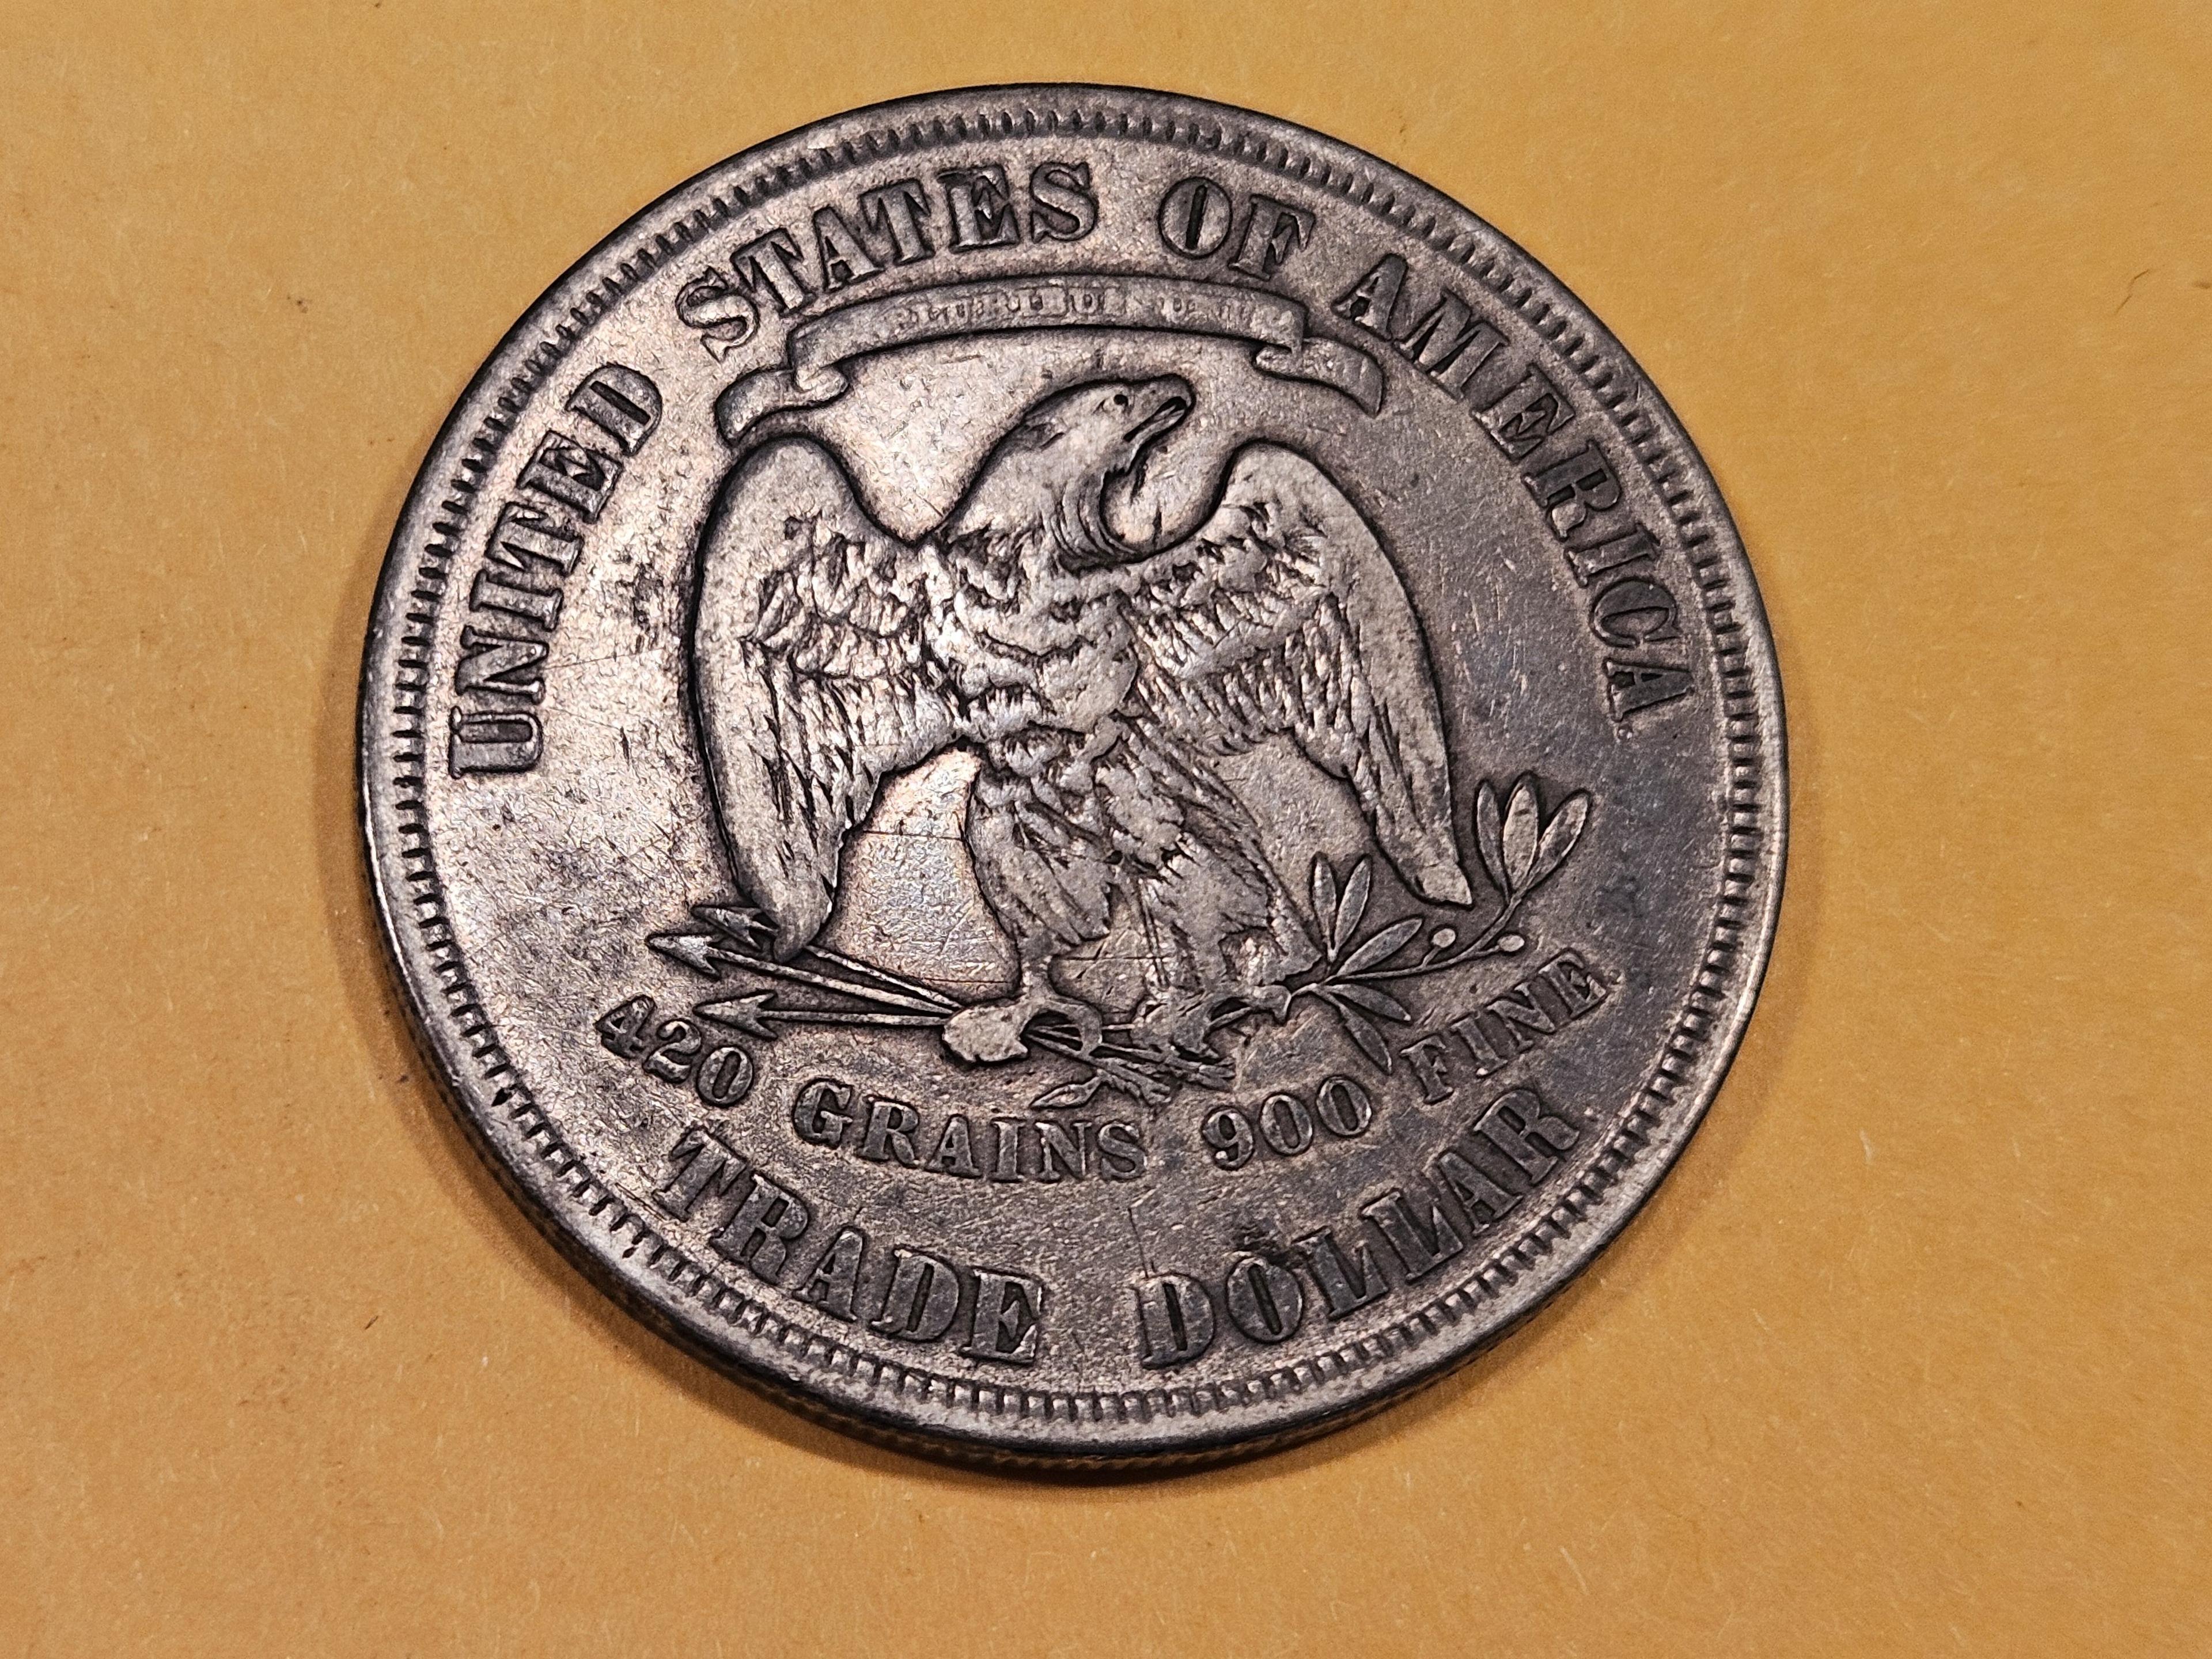 1877 Trade Dollar in Very Fine